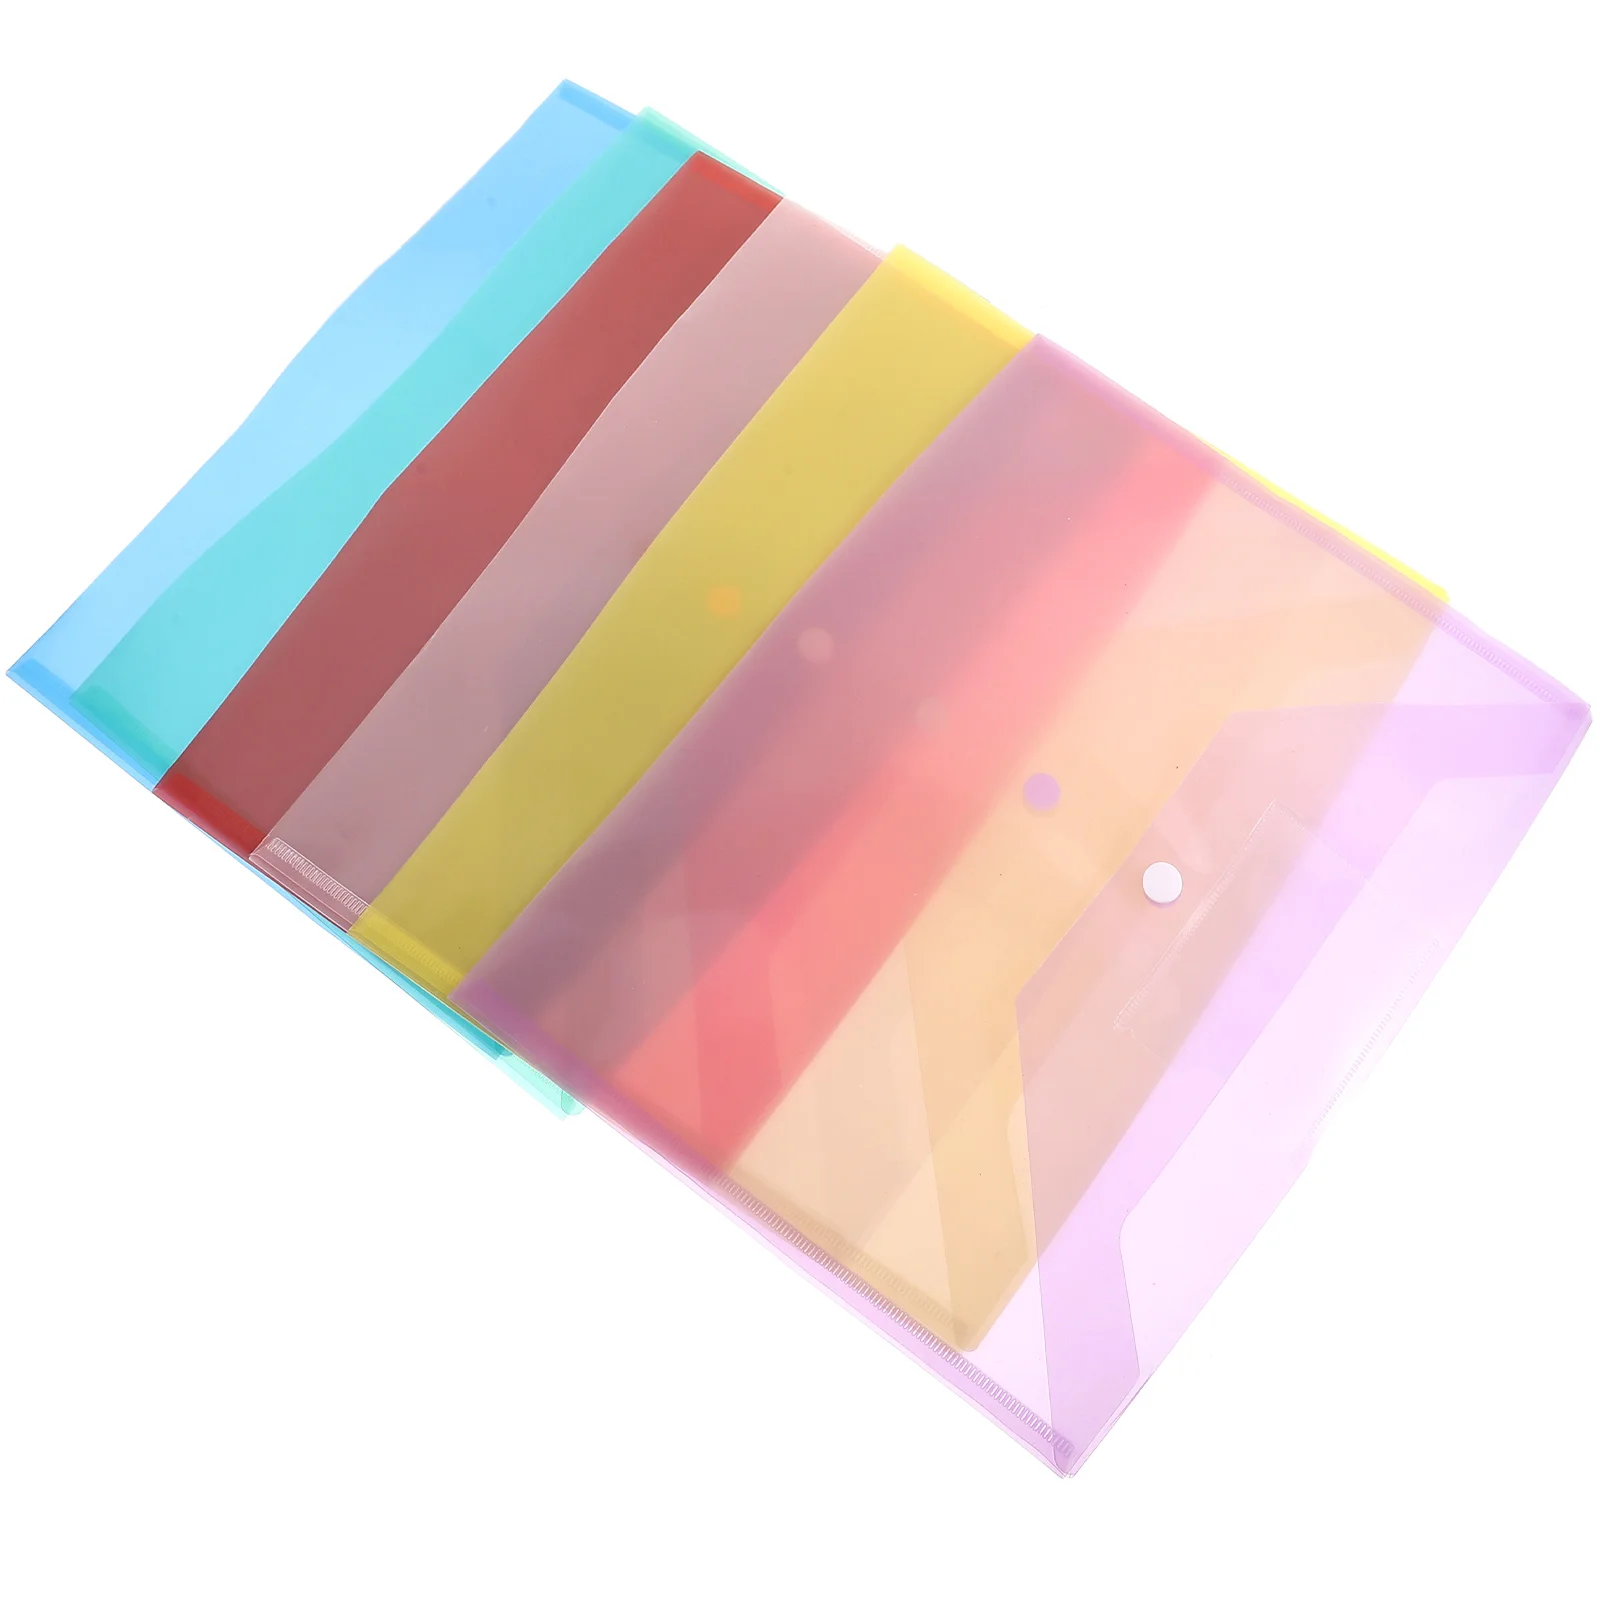 

6 Pcs Folder Office File Folders Storage Bags A4 Clear Plastic Envelope Documents Envelopes Colored Snap Button